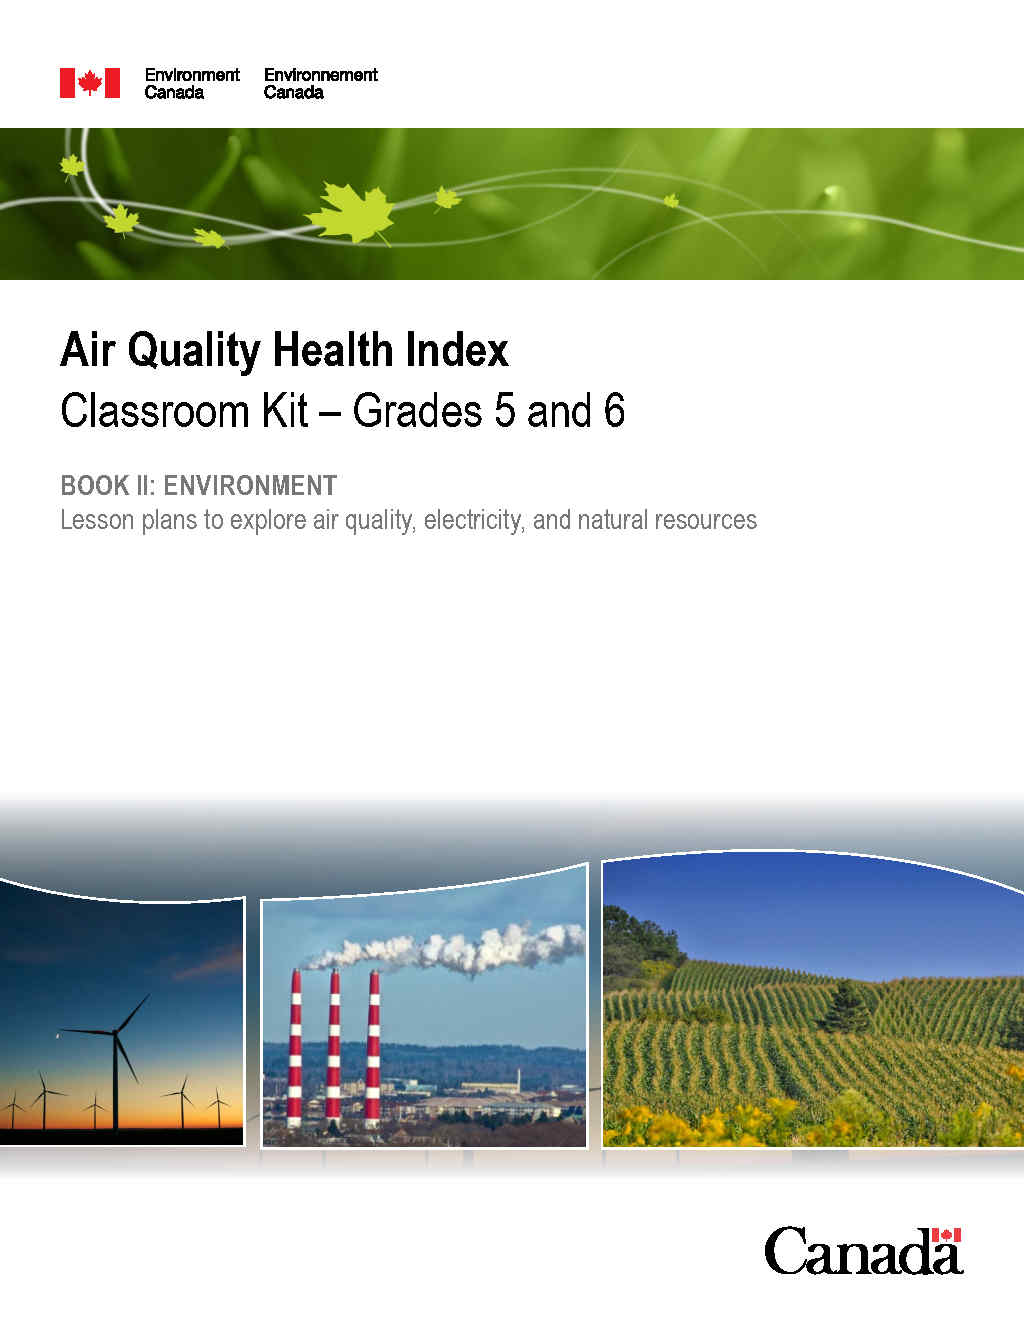 Air Quality Health Index Classroom Kit Book II: Environment